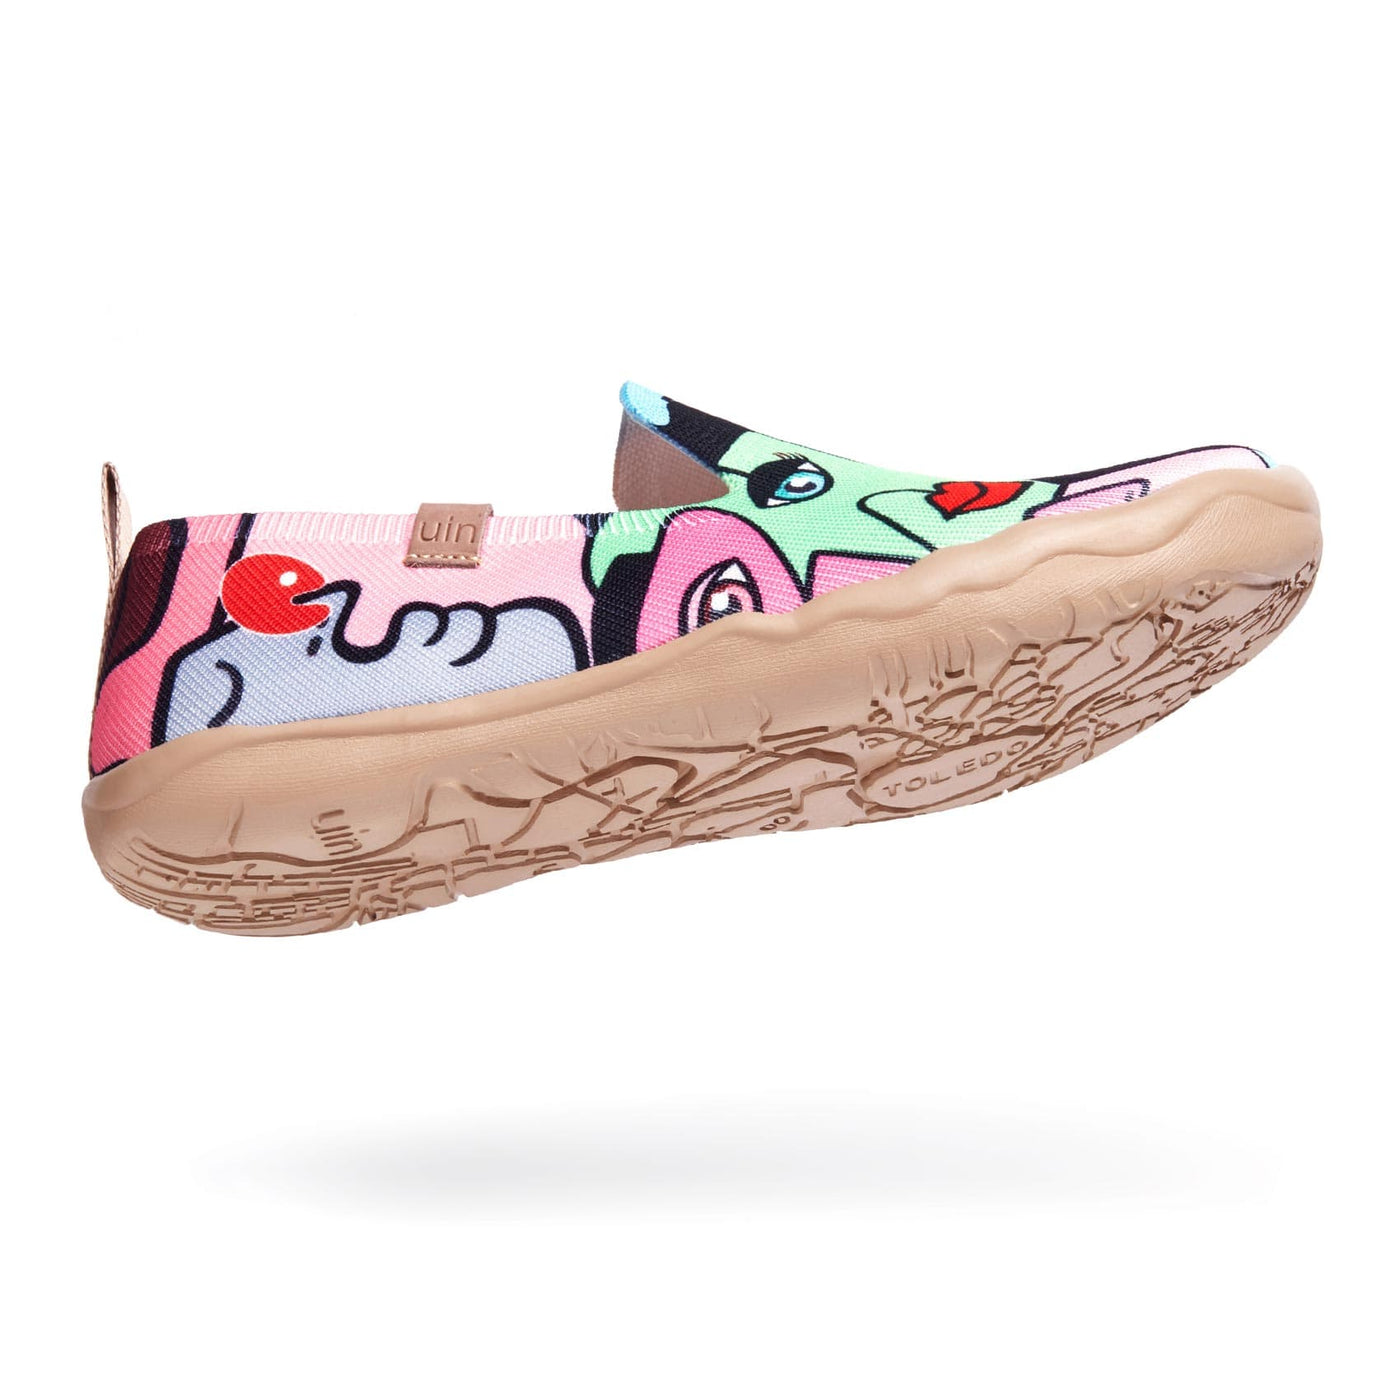 UIN Footwear Women Who I Am Barcelona Canvas loafers